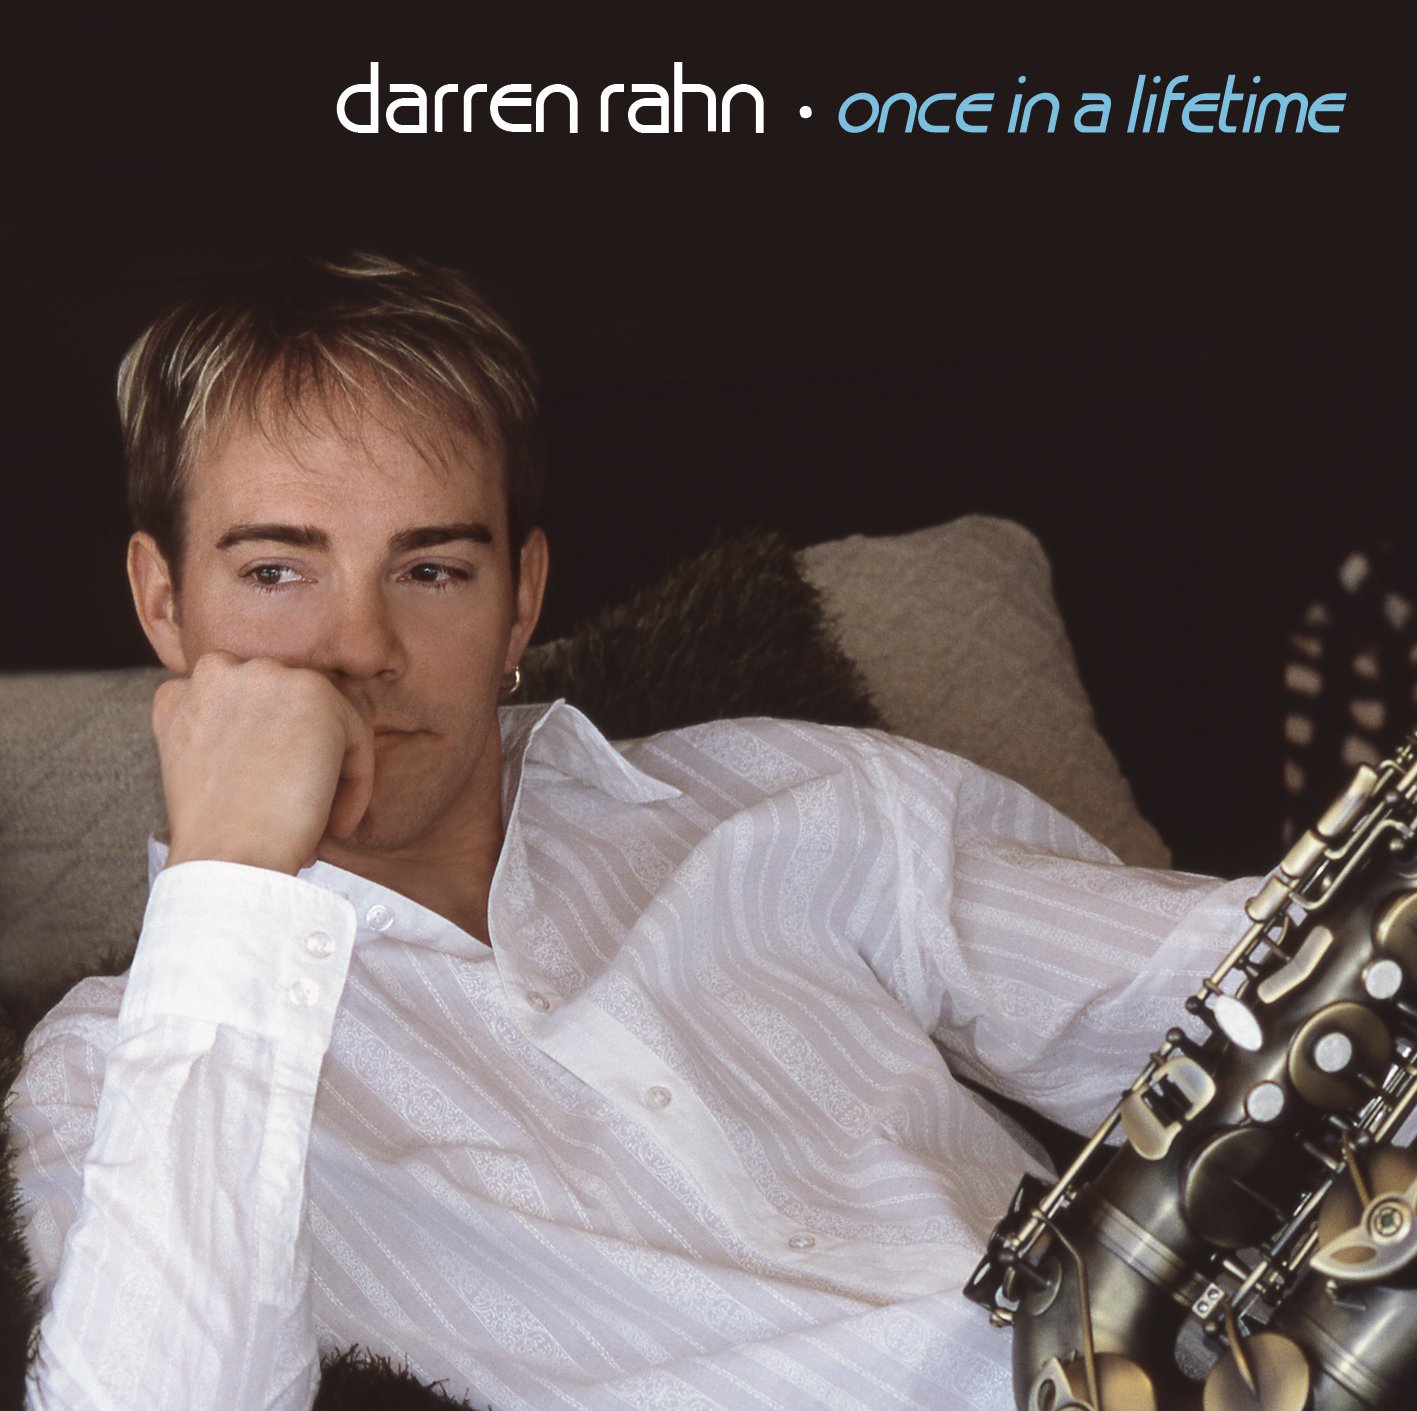 Darren Rahn "Once in a Lifetime" Album